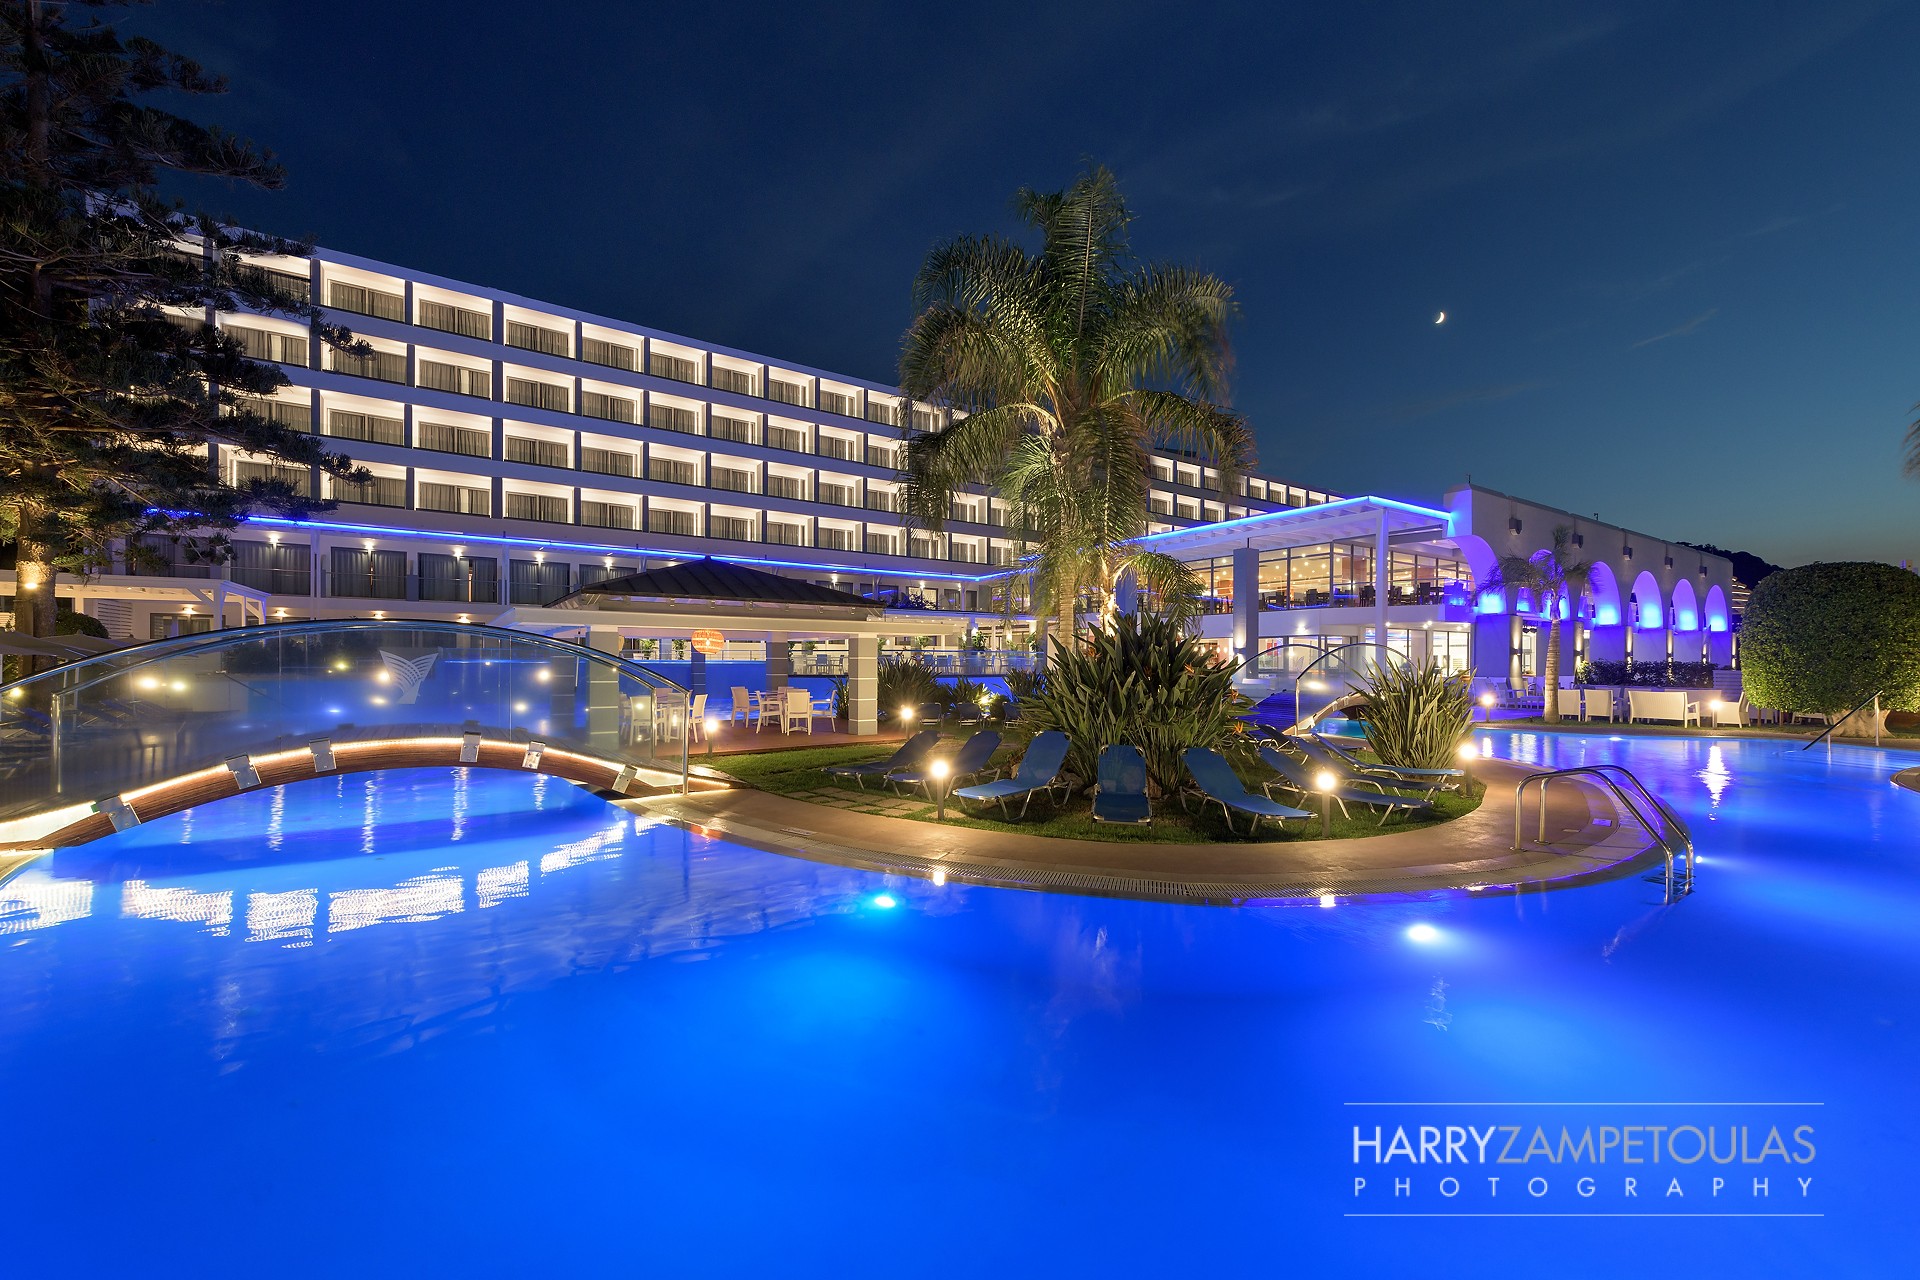 Oceanis-Hotel-Rhodes-Harry-Zampetoulas-Photography-10 Oceanis Hotel Rhodes - Hotel Photography 